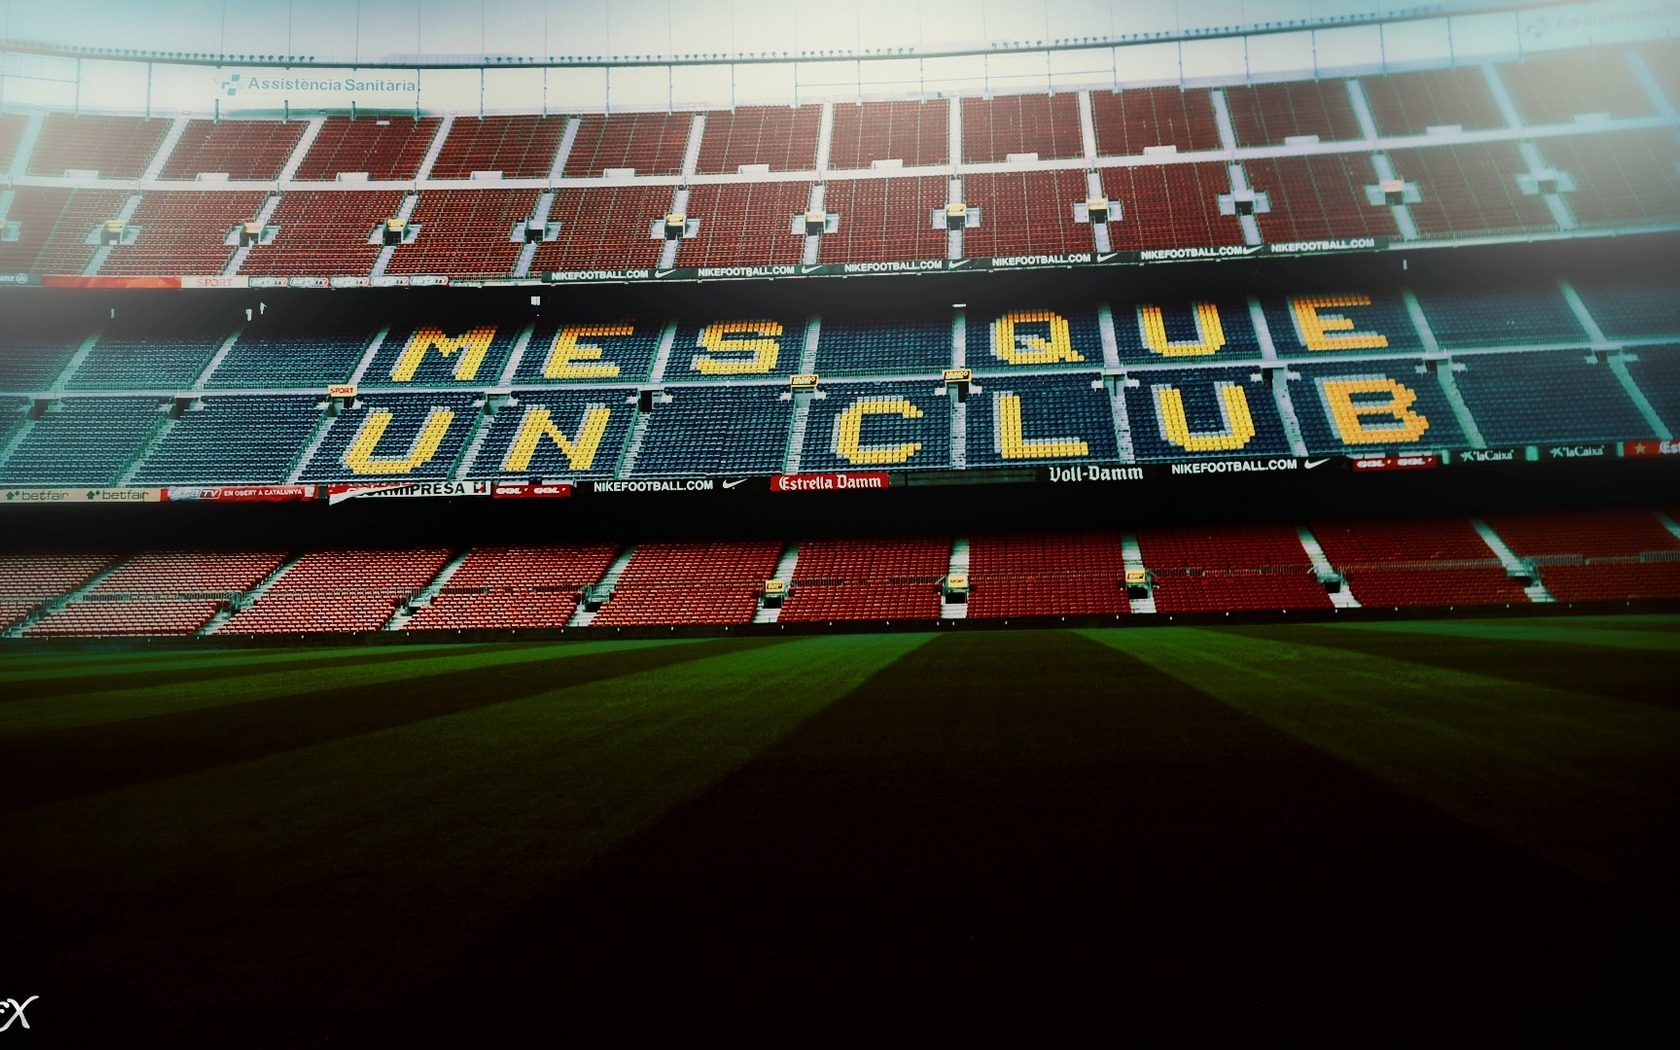 Спорт Футбол Камп Ноу, футбольный стадион, Барселона обои рабочий стол